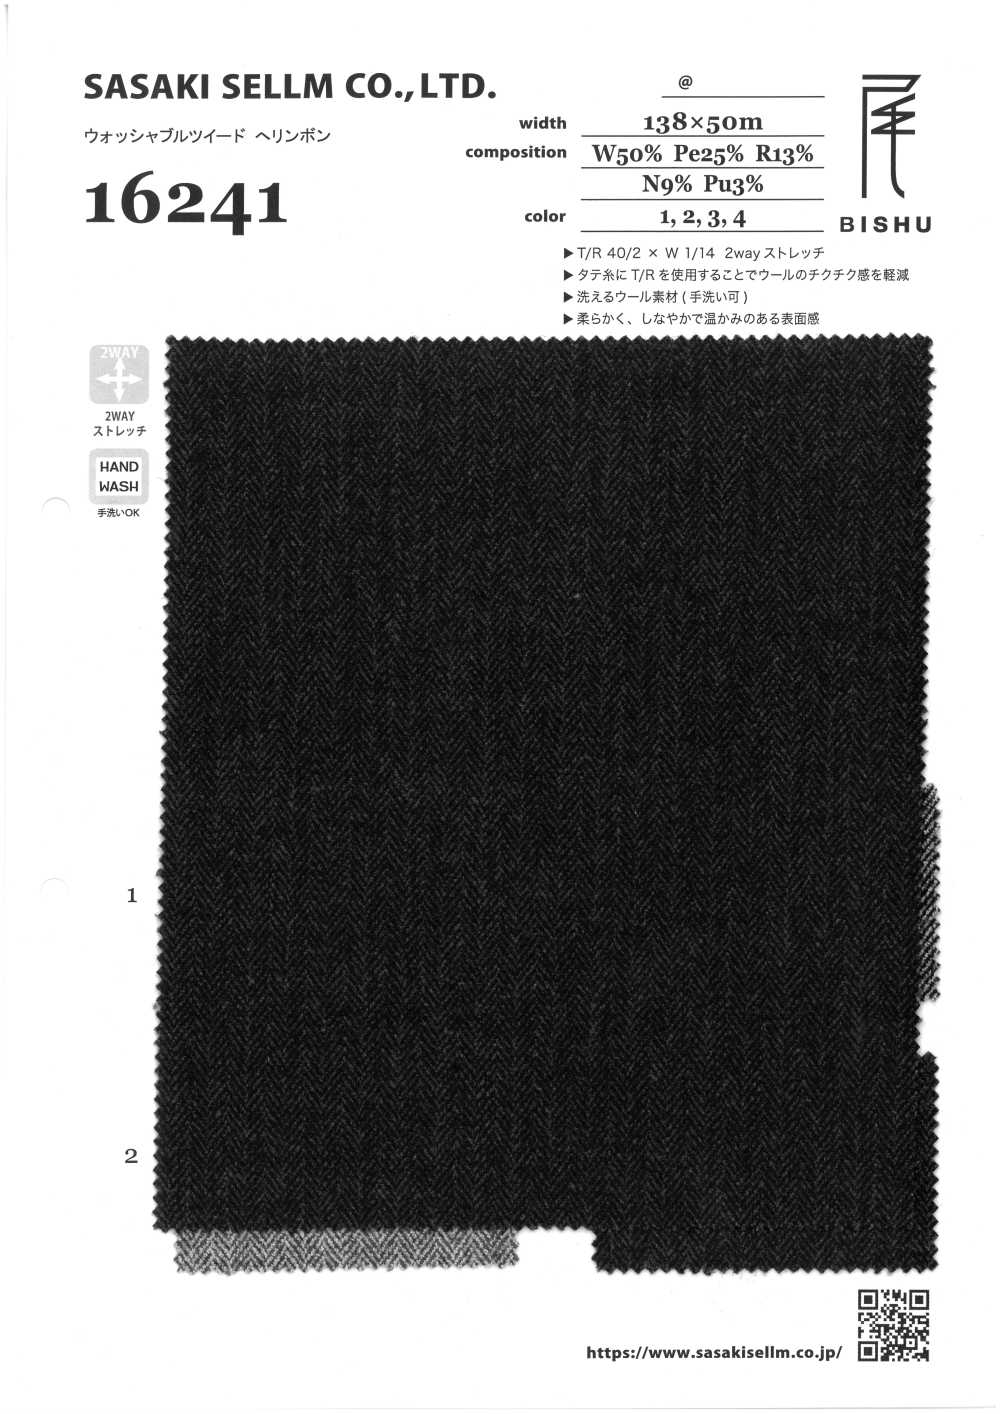 16241-1 Washable Tweed 2WAY Herringbone[Textile / Fabric] SASAKISELLM